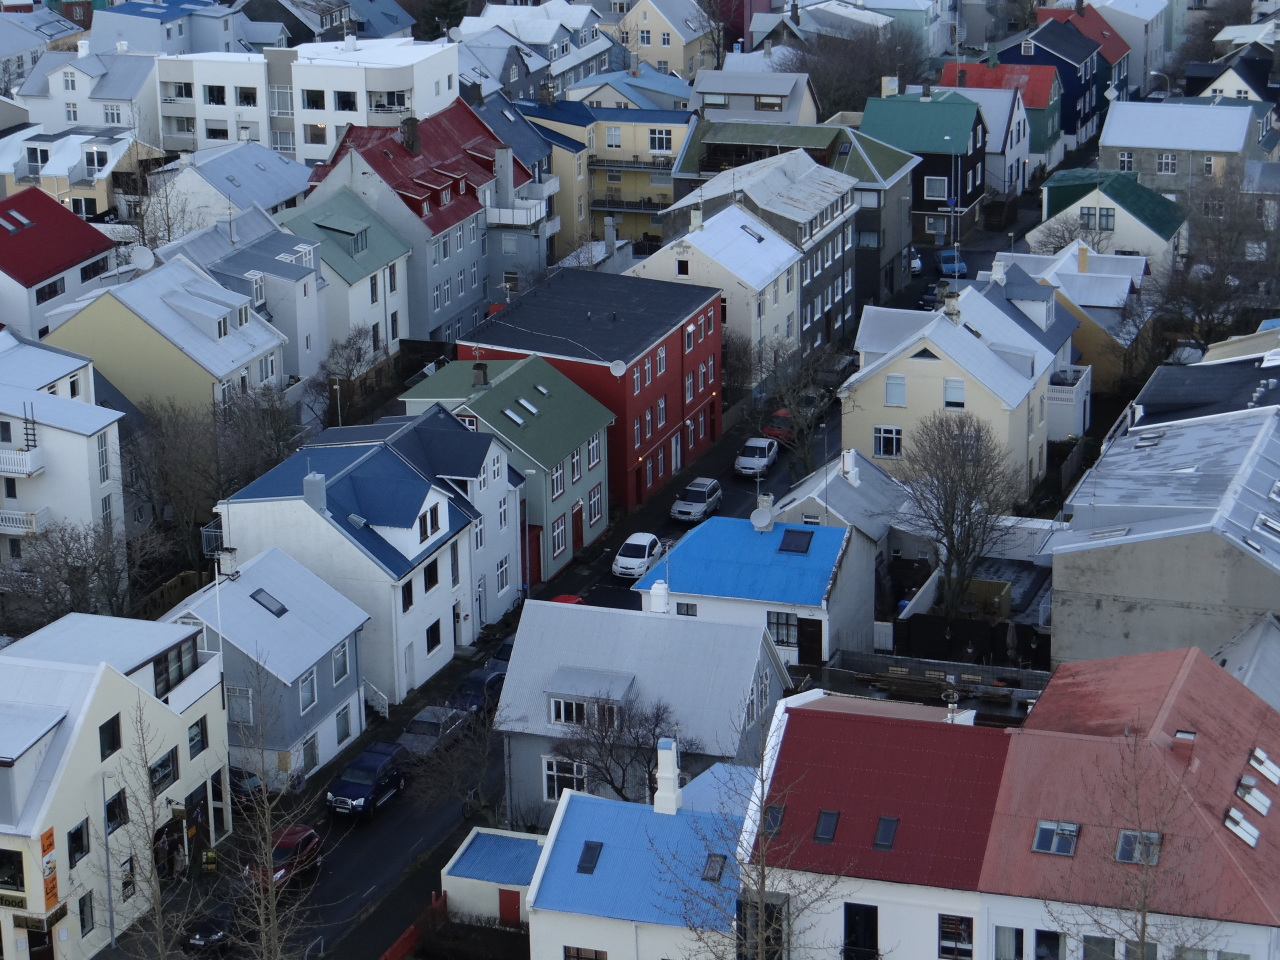 Colorful houses of Reykjavik Iceland